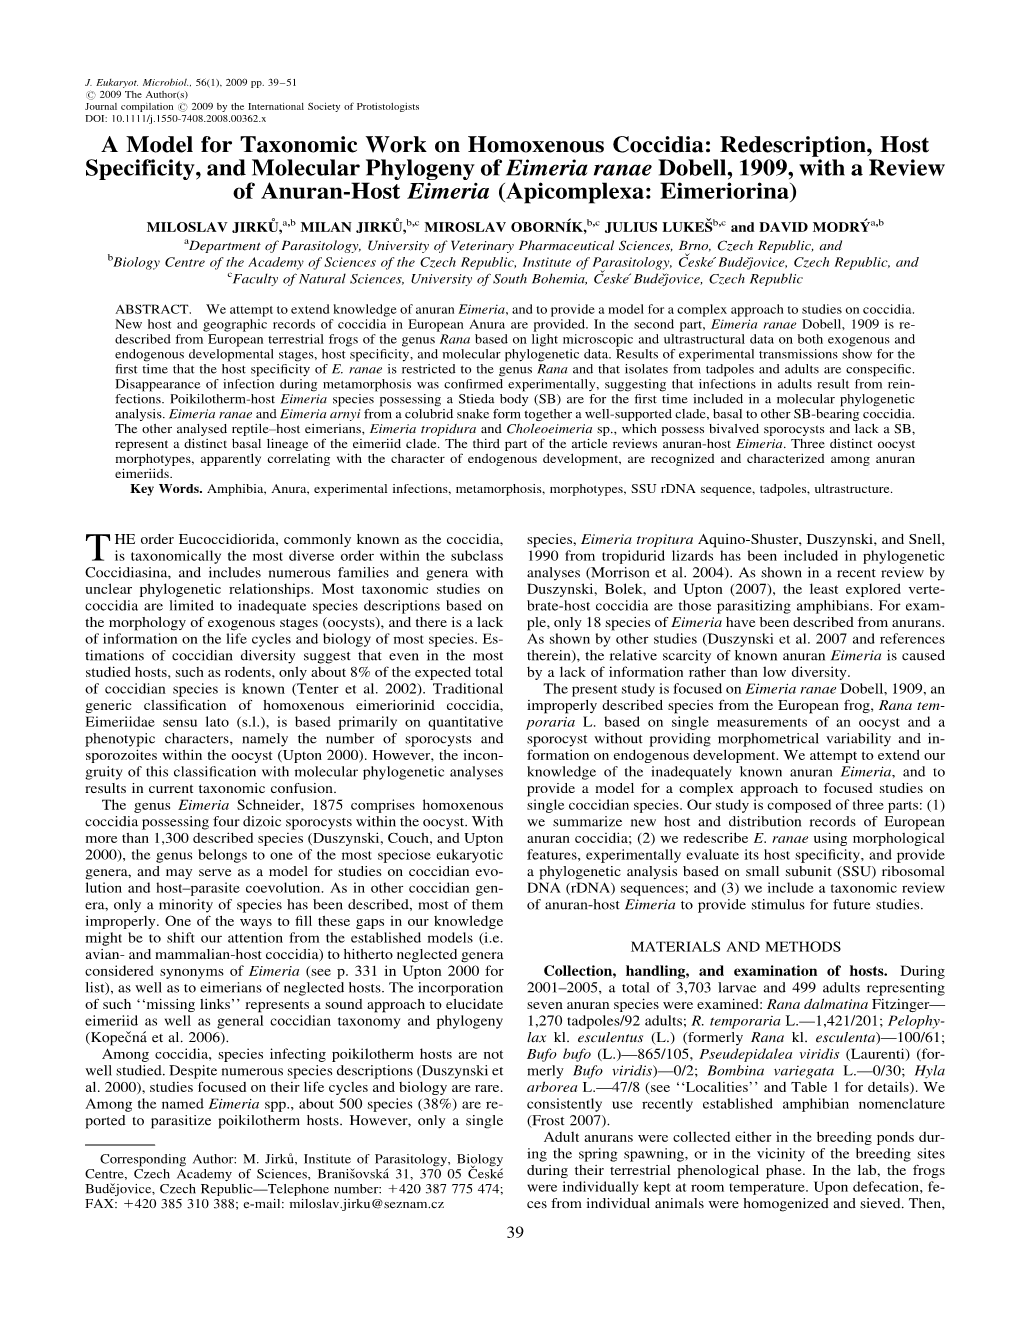 Redescription, Host Specificity, and Molecular Phylogeny of Eimeria Ranae Dobell, 1909, with a Review of Anuran-Host Eimeria (Apicomplexa: Eimeriorina)